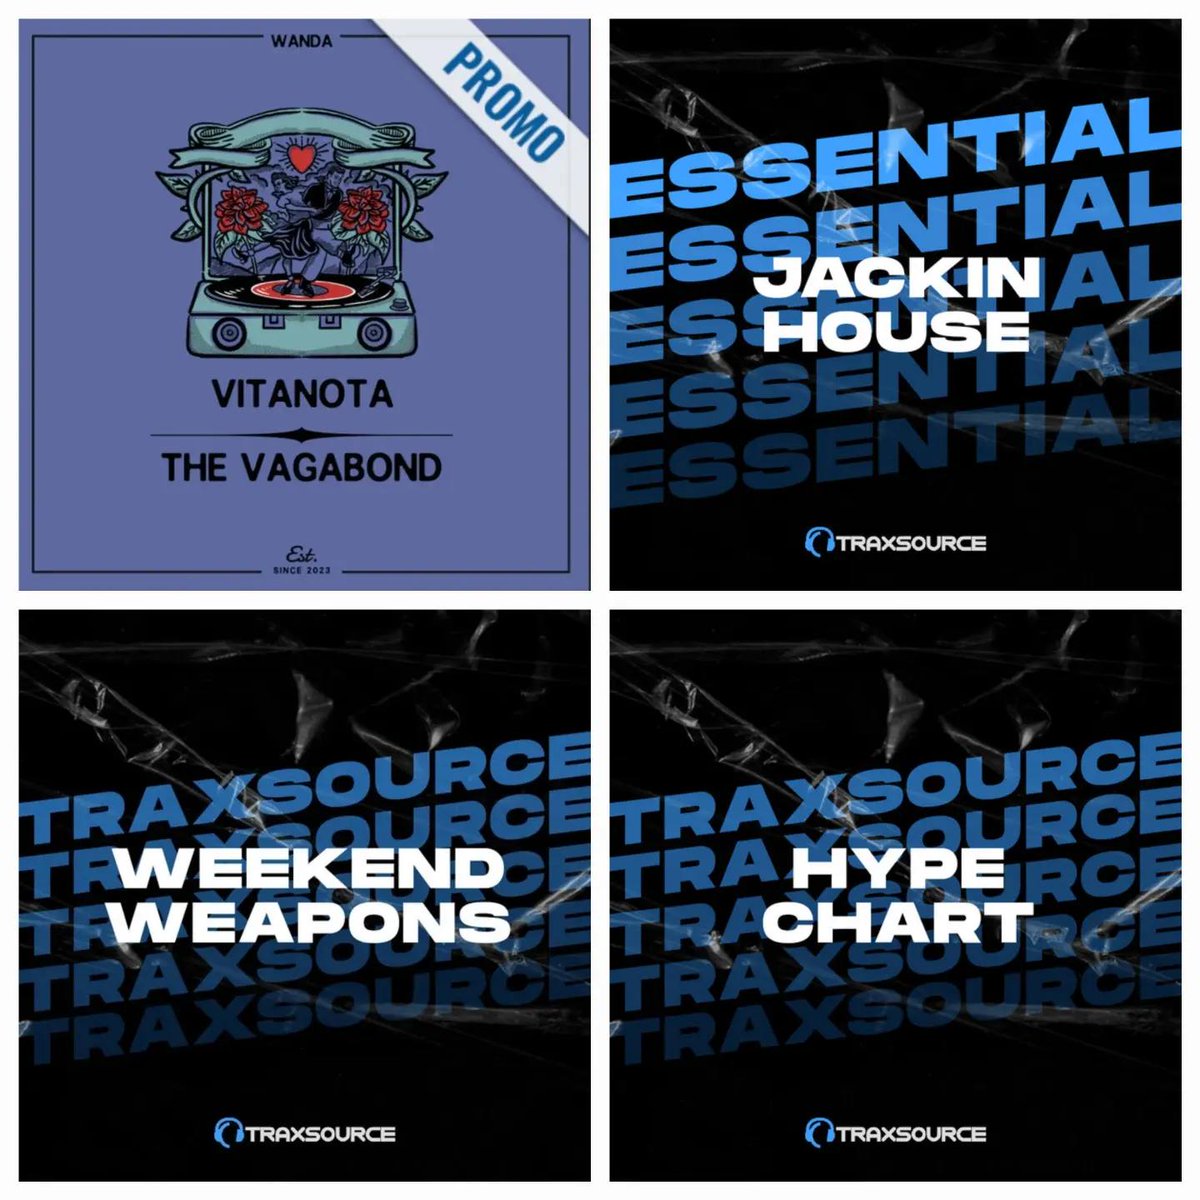 Massive Support from @traxsource Charting my new track 'The Vagabond' 
Jackin House Essentials : #24
Hype Chart : #171
Weekend Weapons : #251
Label // Wanda
Grab your copy now :
traxsource.com/.../the-vagabo…
#traxsourcecharts
#vitanota 
#vitanotamusic